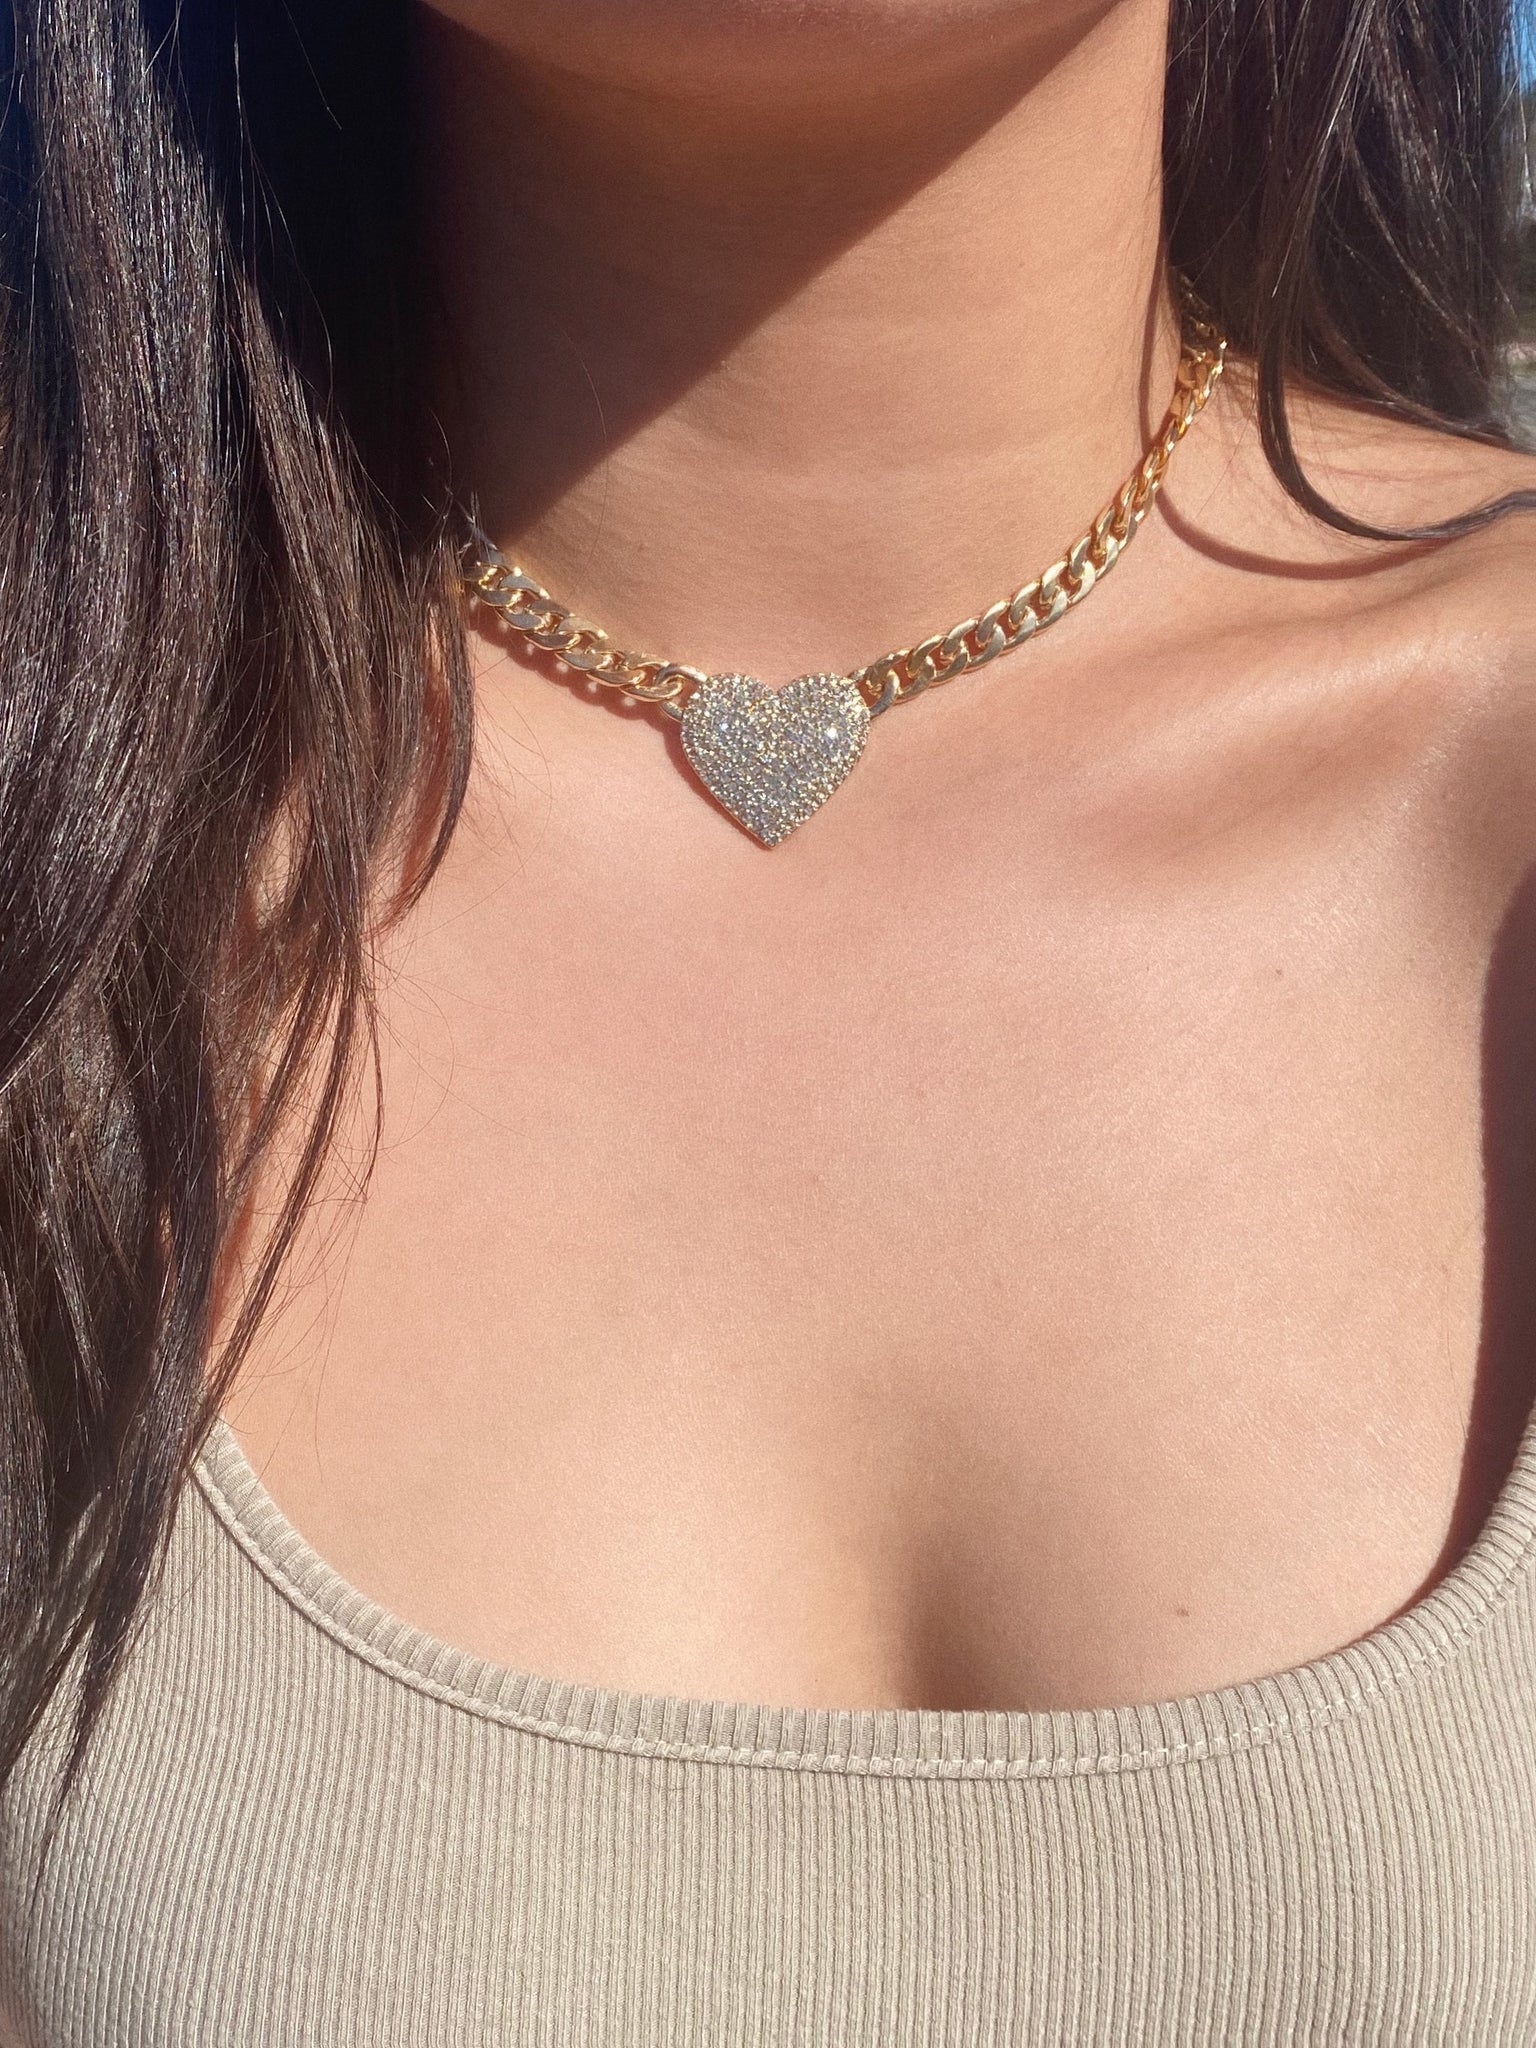 lovey necklace